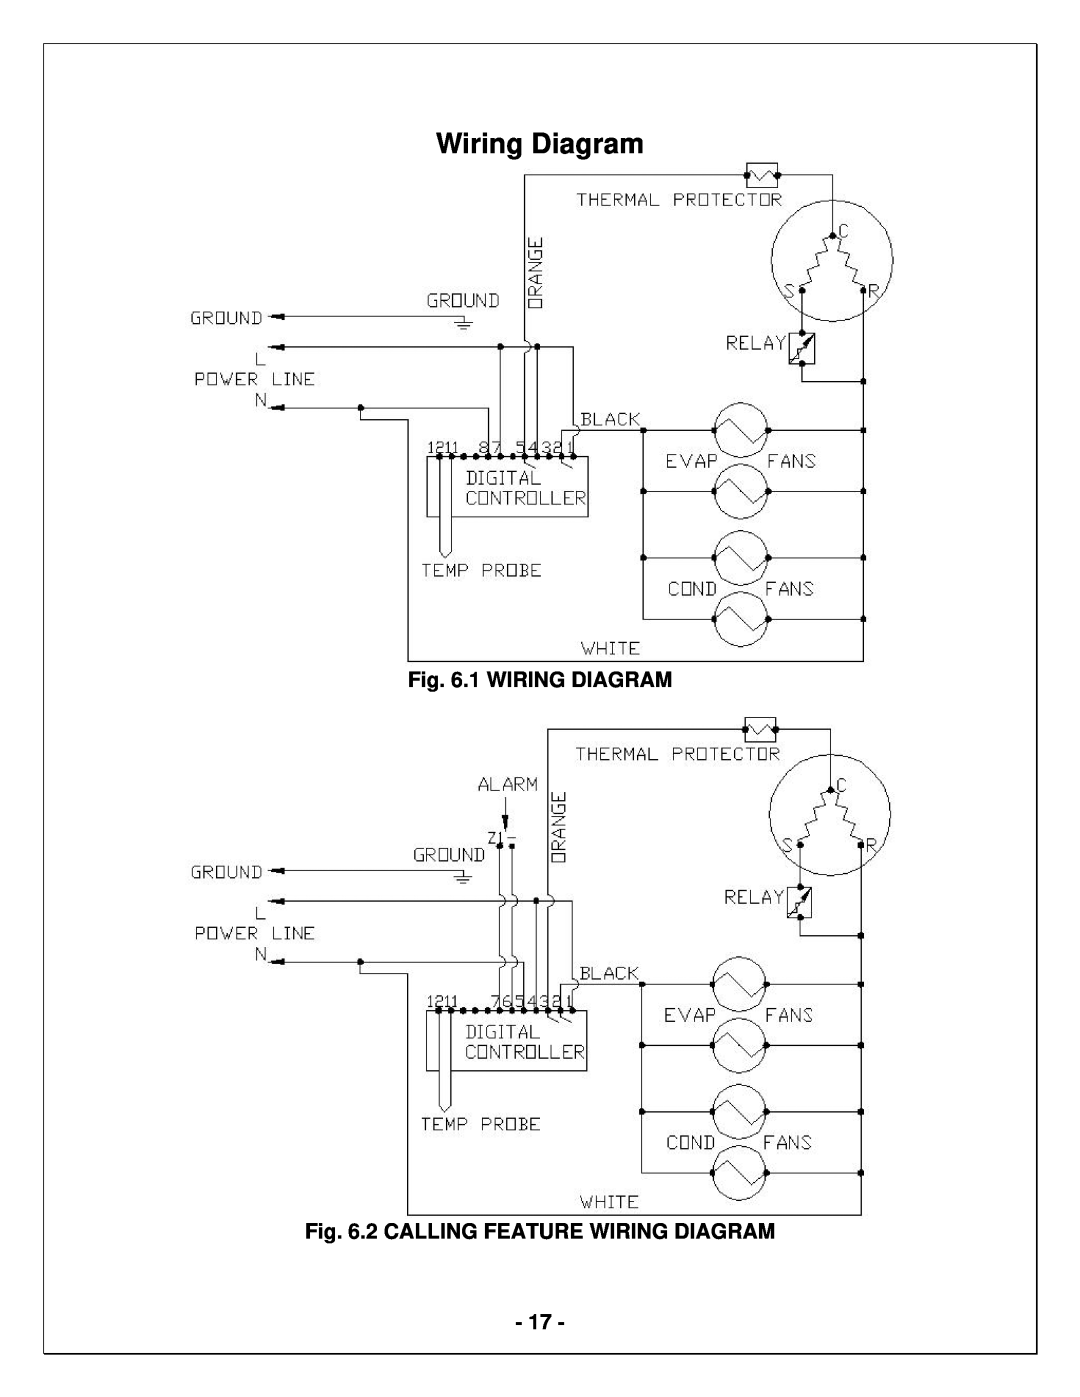 Vinotemp WM1500 HTD-TE, WM2500 HTD-TE manual Wiring Diagram, 1 WIRING DIAGRAM, 2 CALLING FEATURE WIRING DIAGRAM 17 